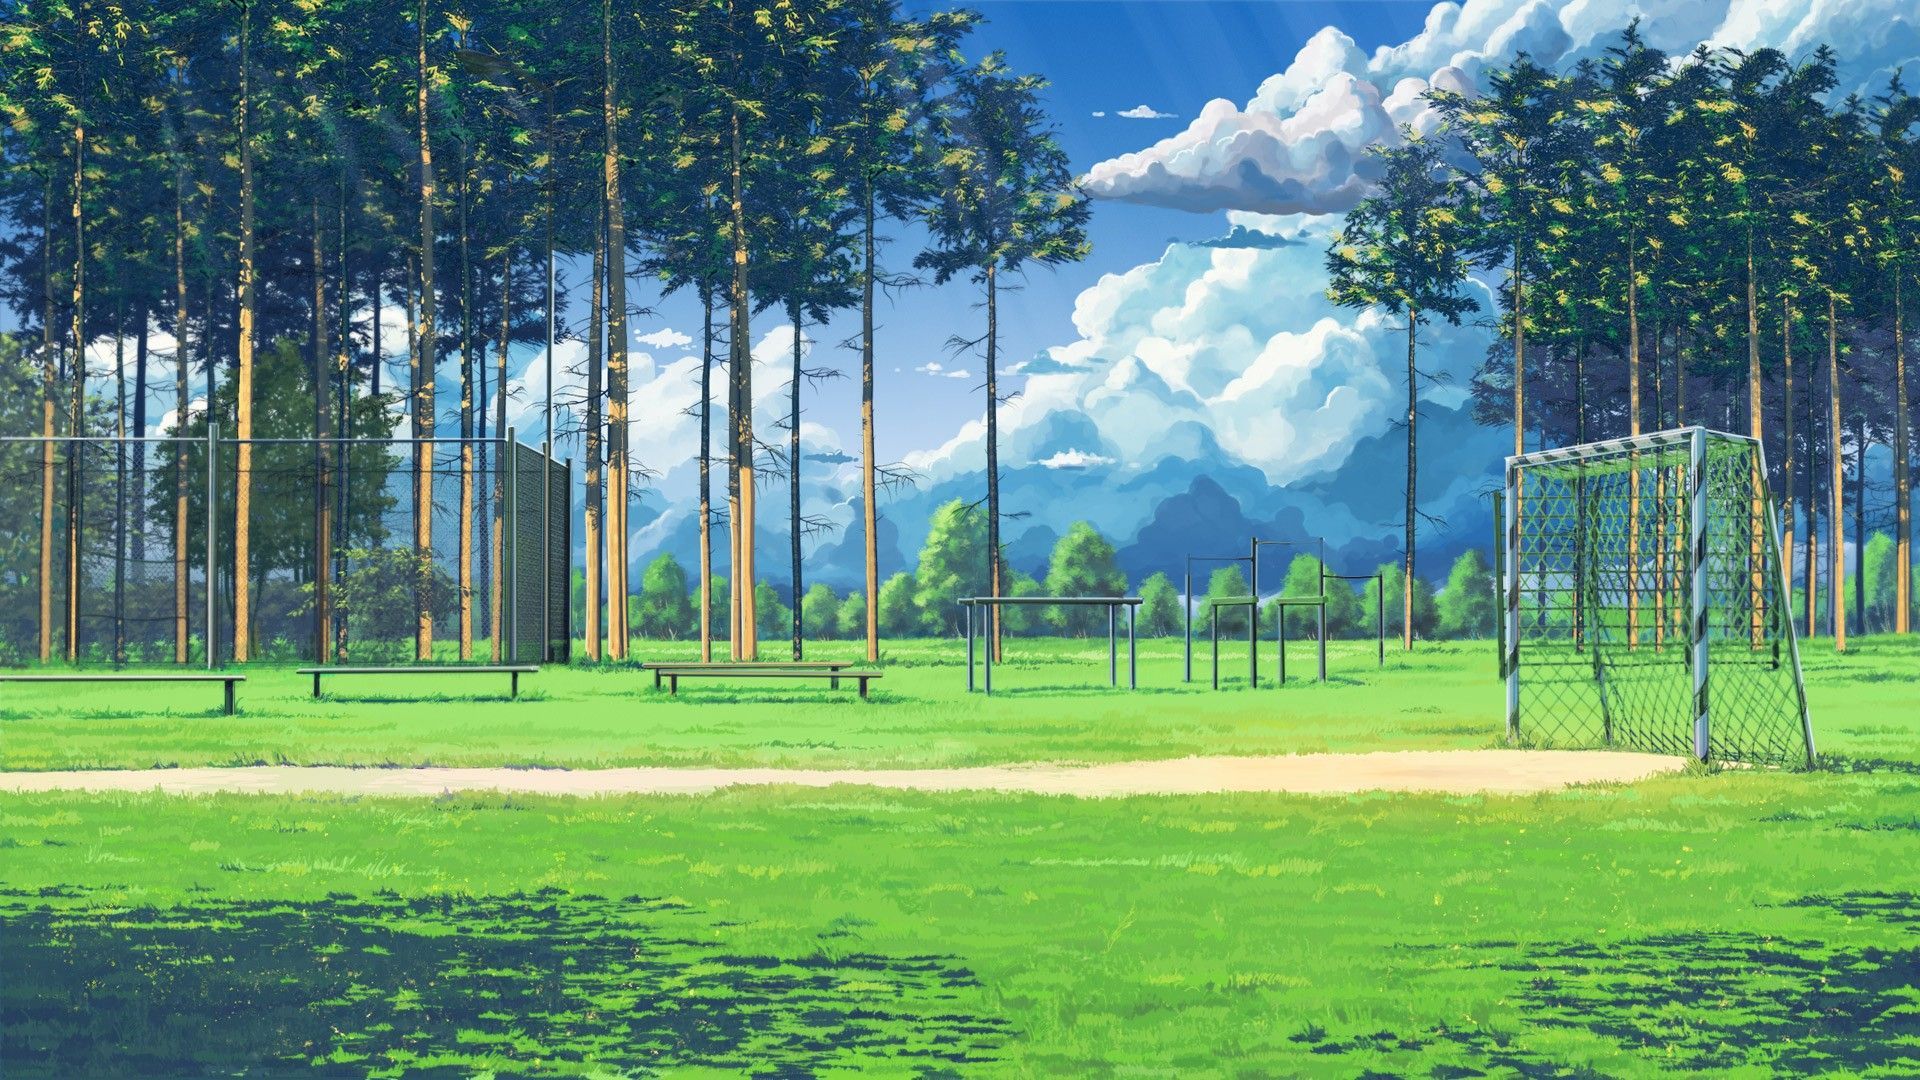 Anime Grass Field Wallpapers - Wallpaper Cave